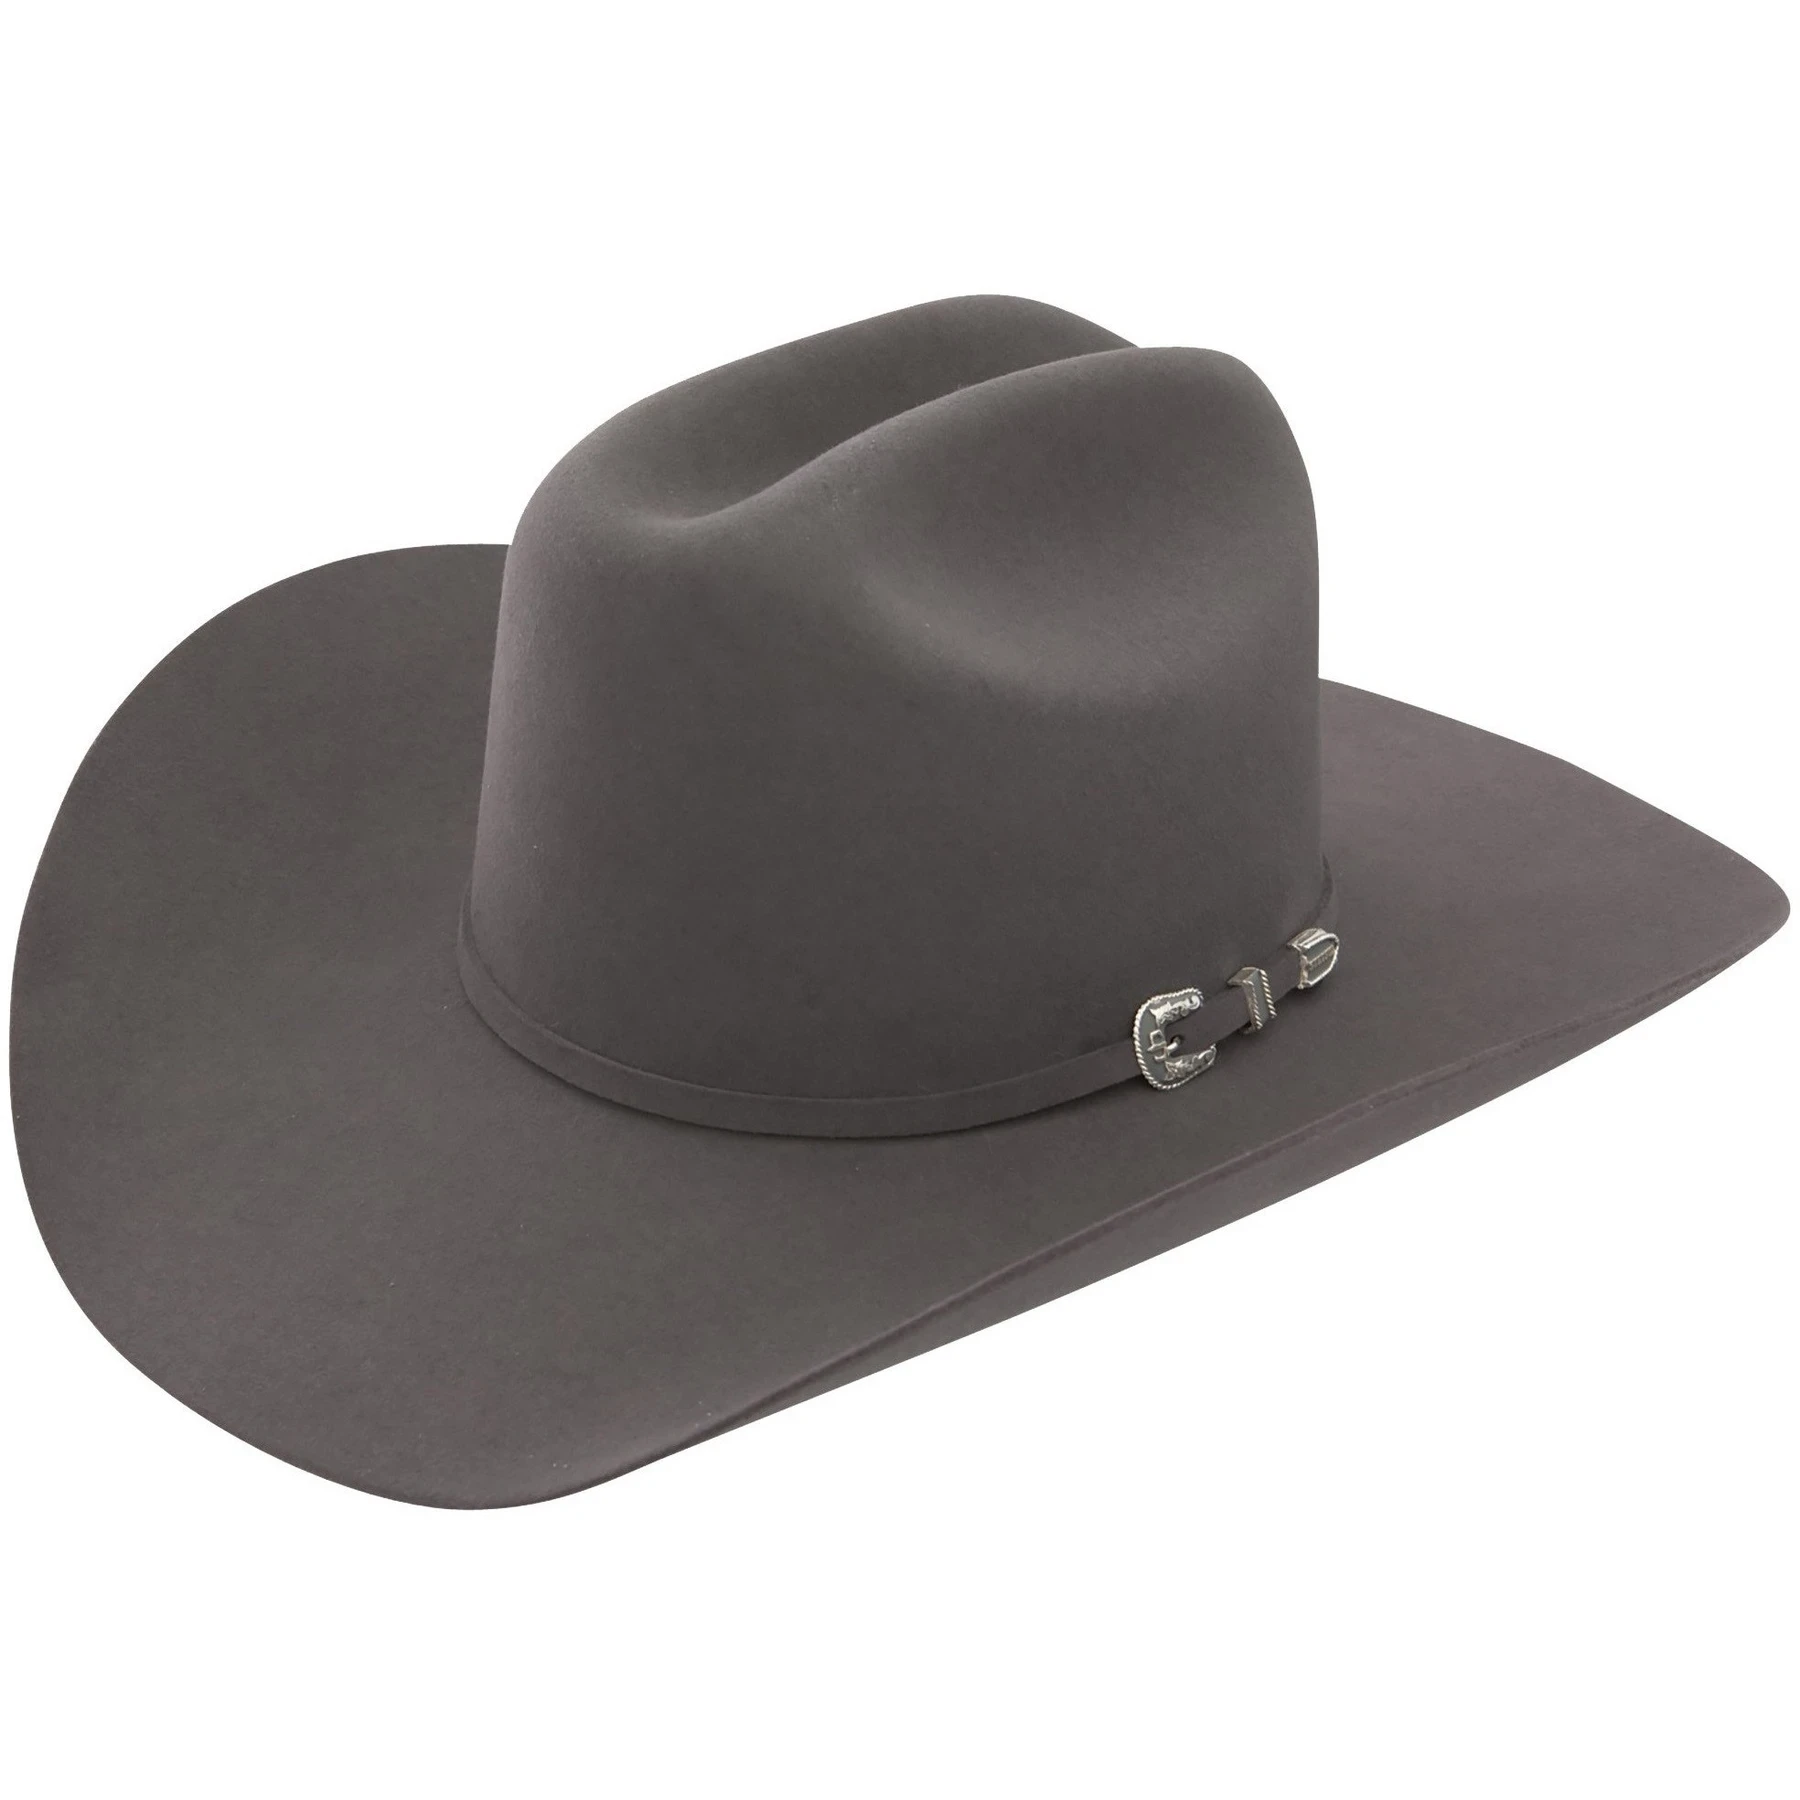 6x Stetson Skyline Fur Felt Cowboy Hat Granite Gray